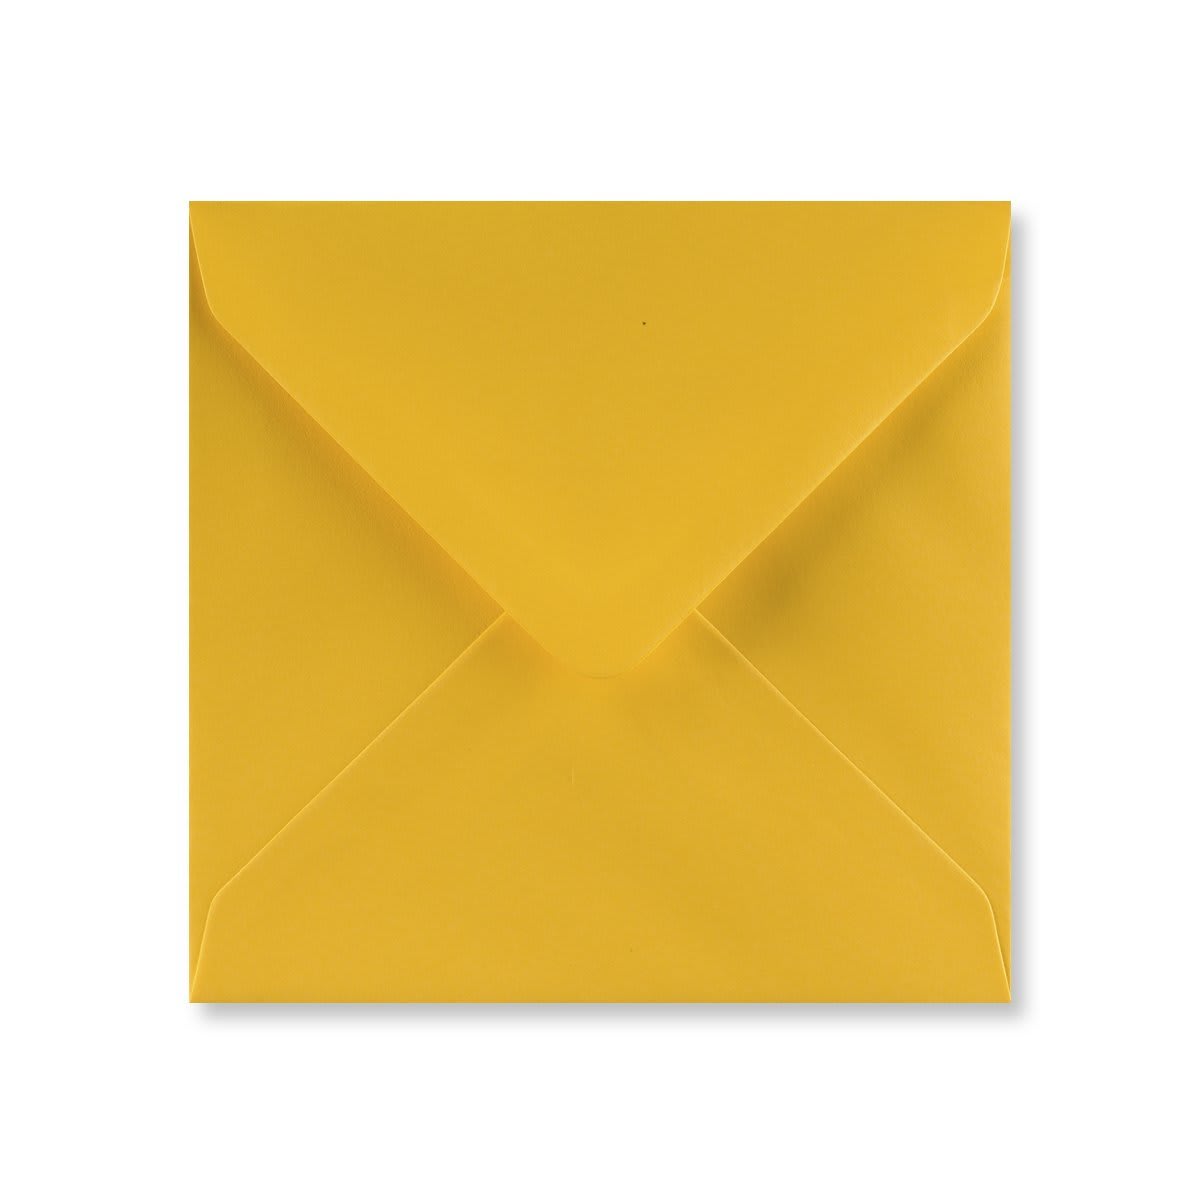 6.1 x 6.1 " Golden Yellow Square Envelopes 68lb